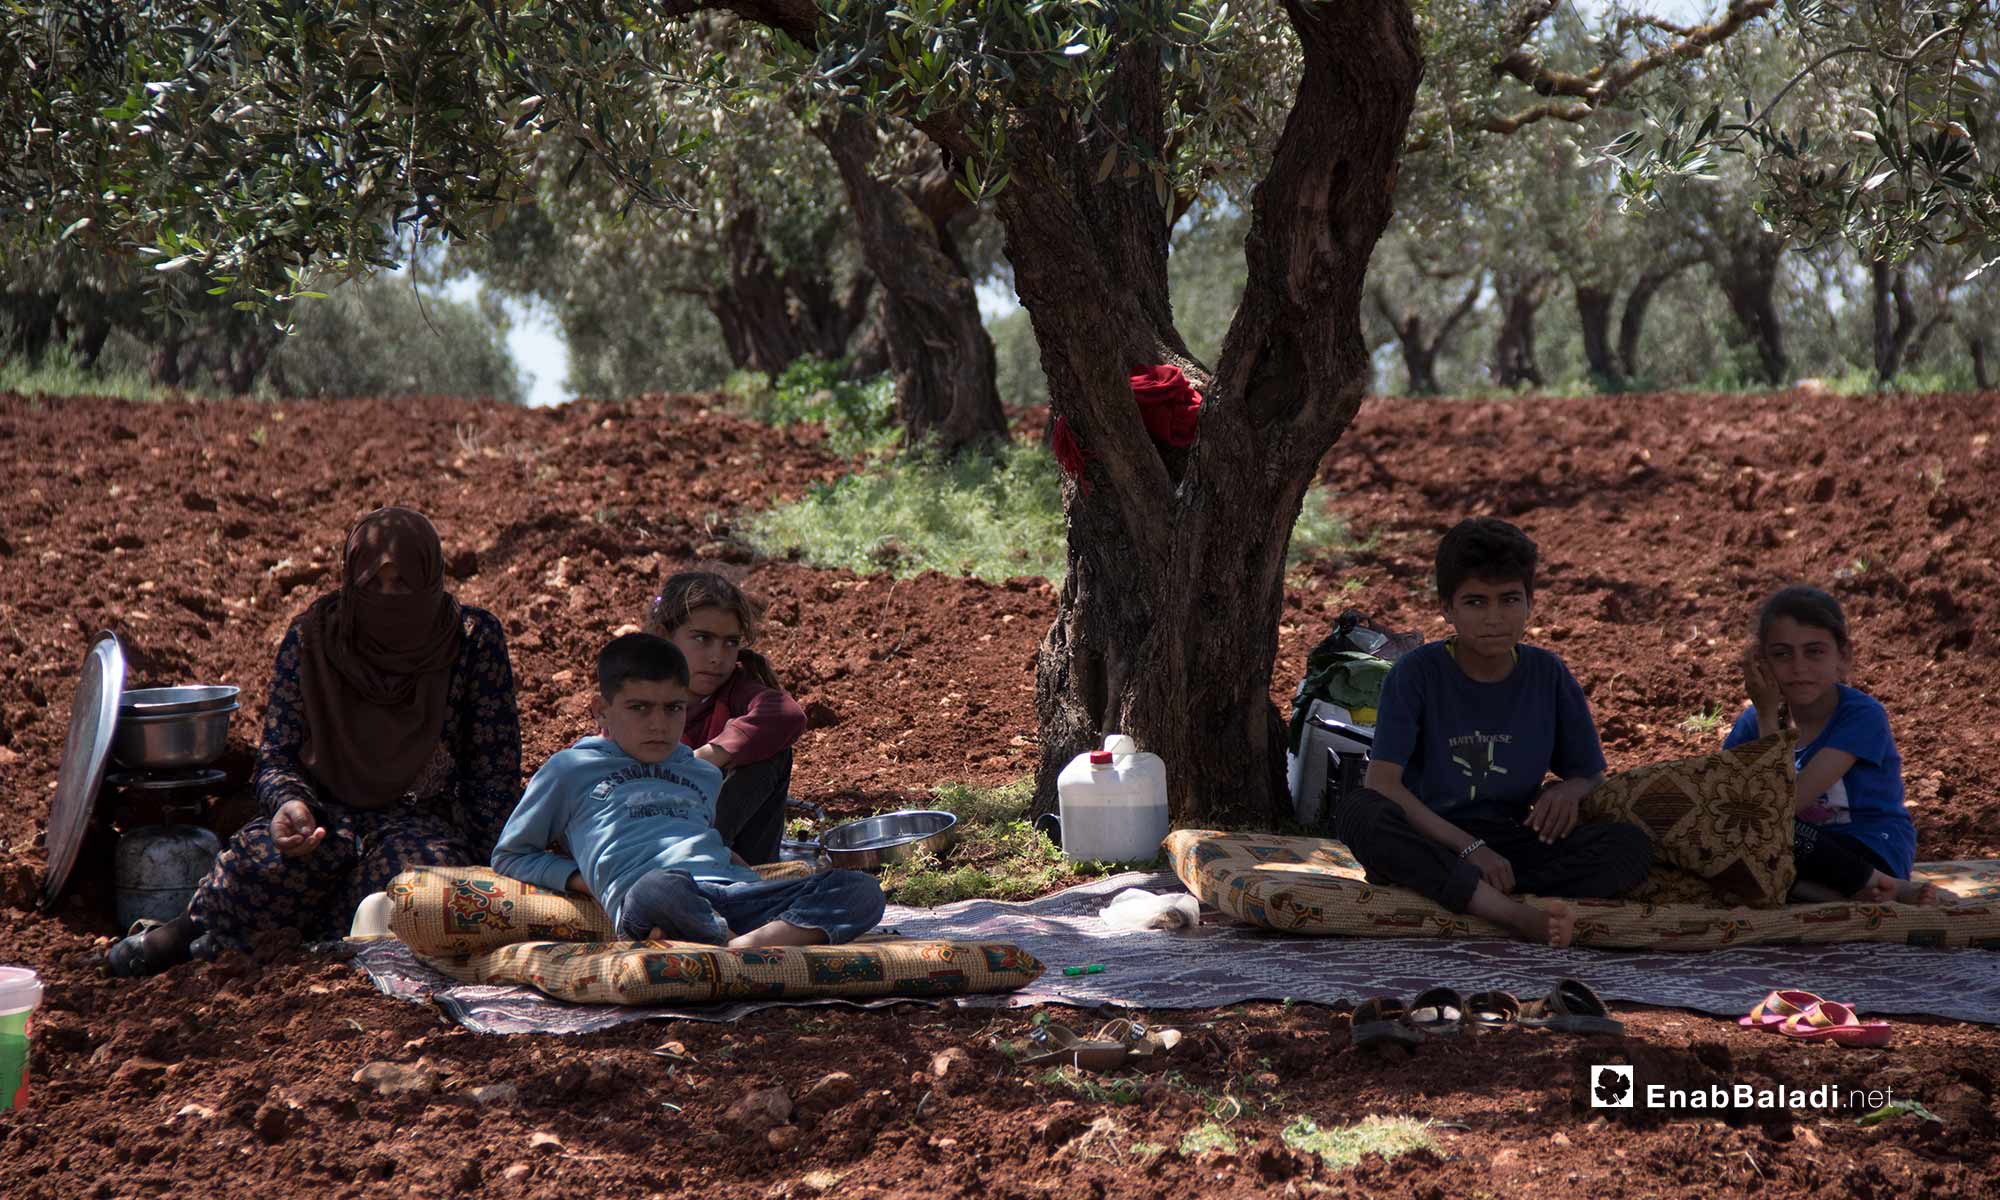 Civilians from Idlib resorting to the Syrian-Turkish borders, fleeing the bombardment – May 3, 2019 (Enab Baladi)